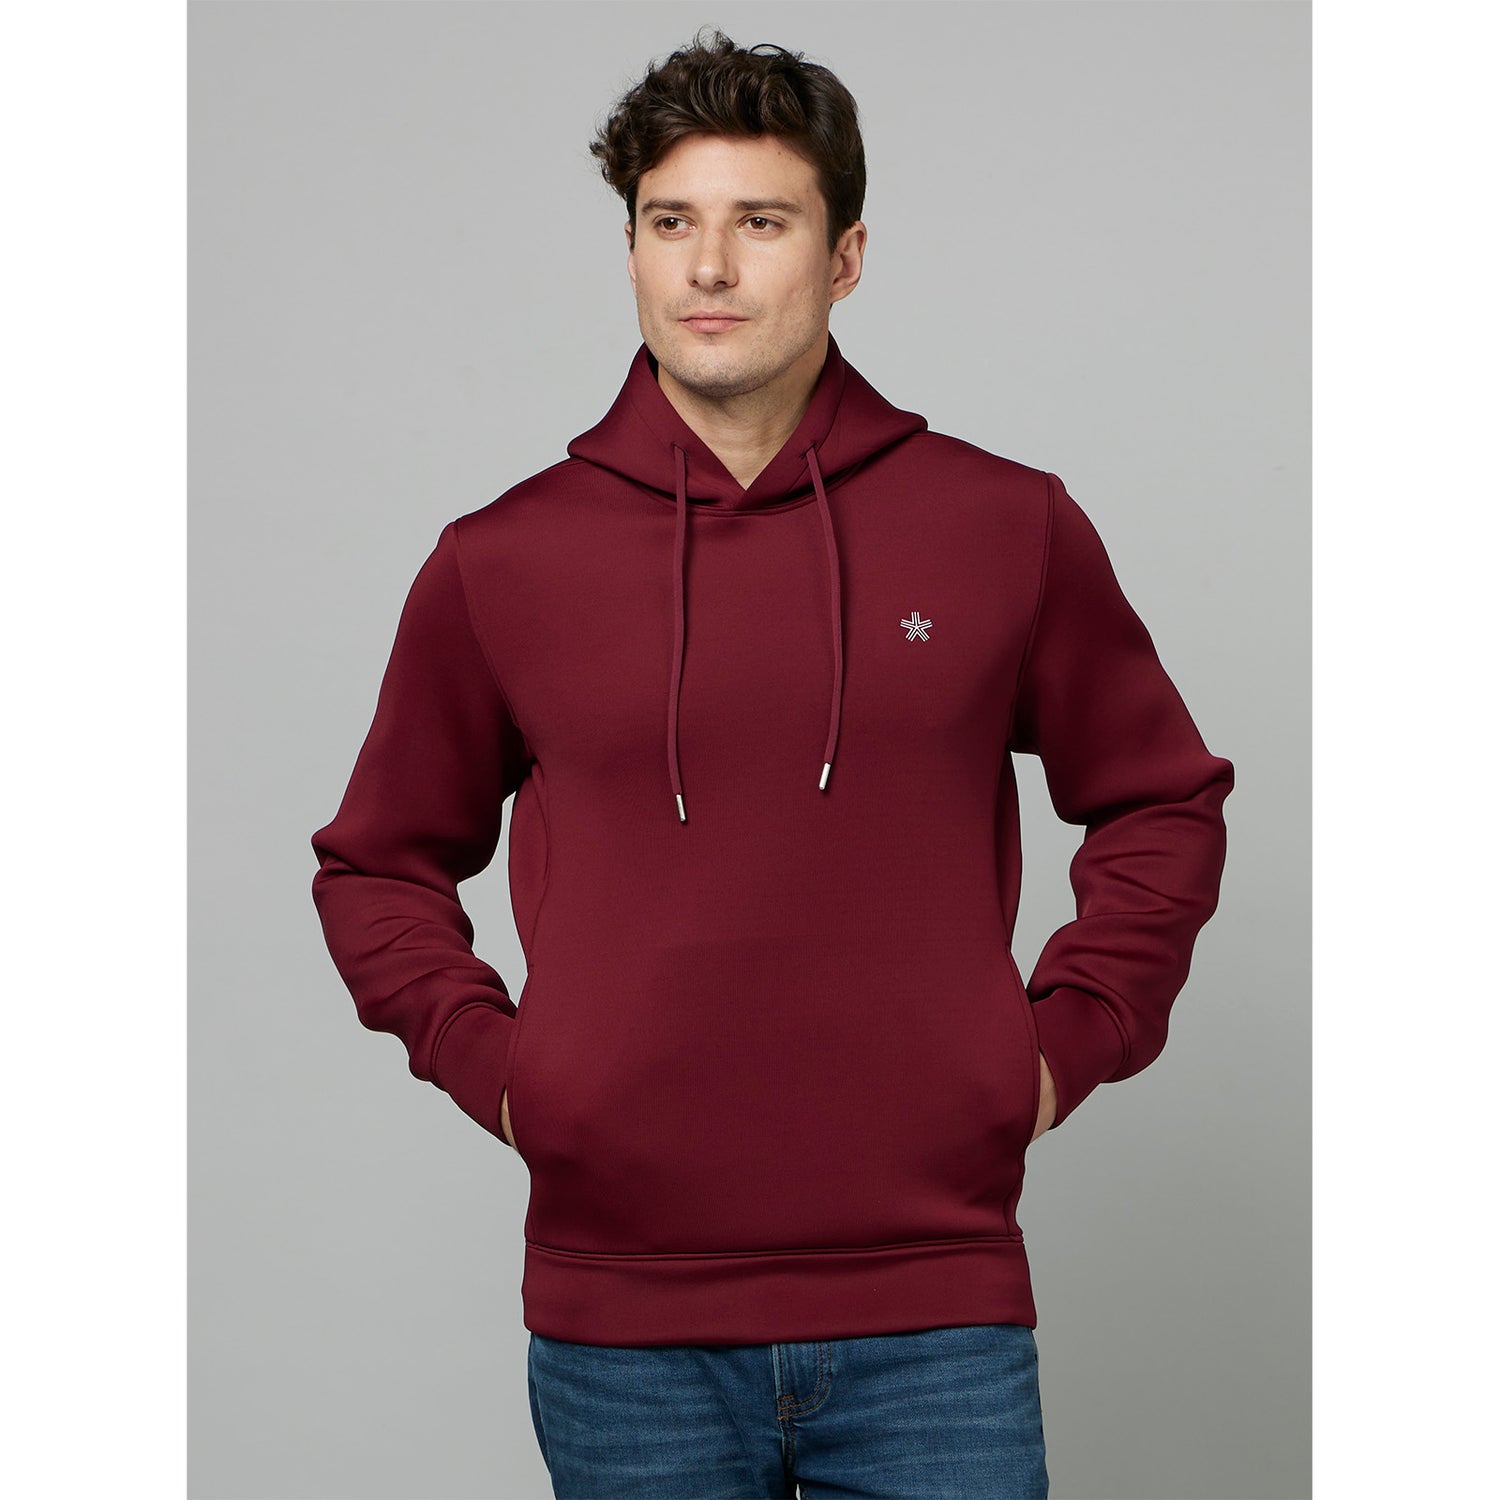 Burgundy Hooded Long Sleeves Cotton Pullover Sweatshirt (FESCUBAH)